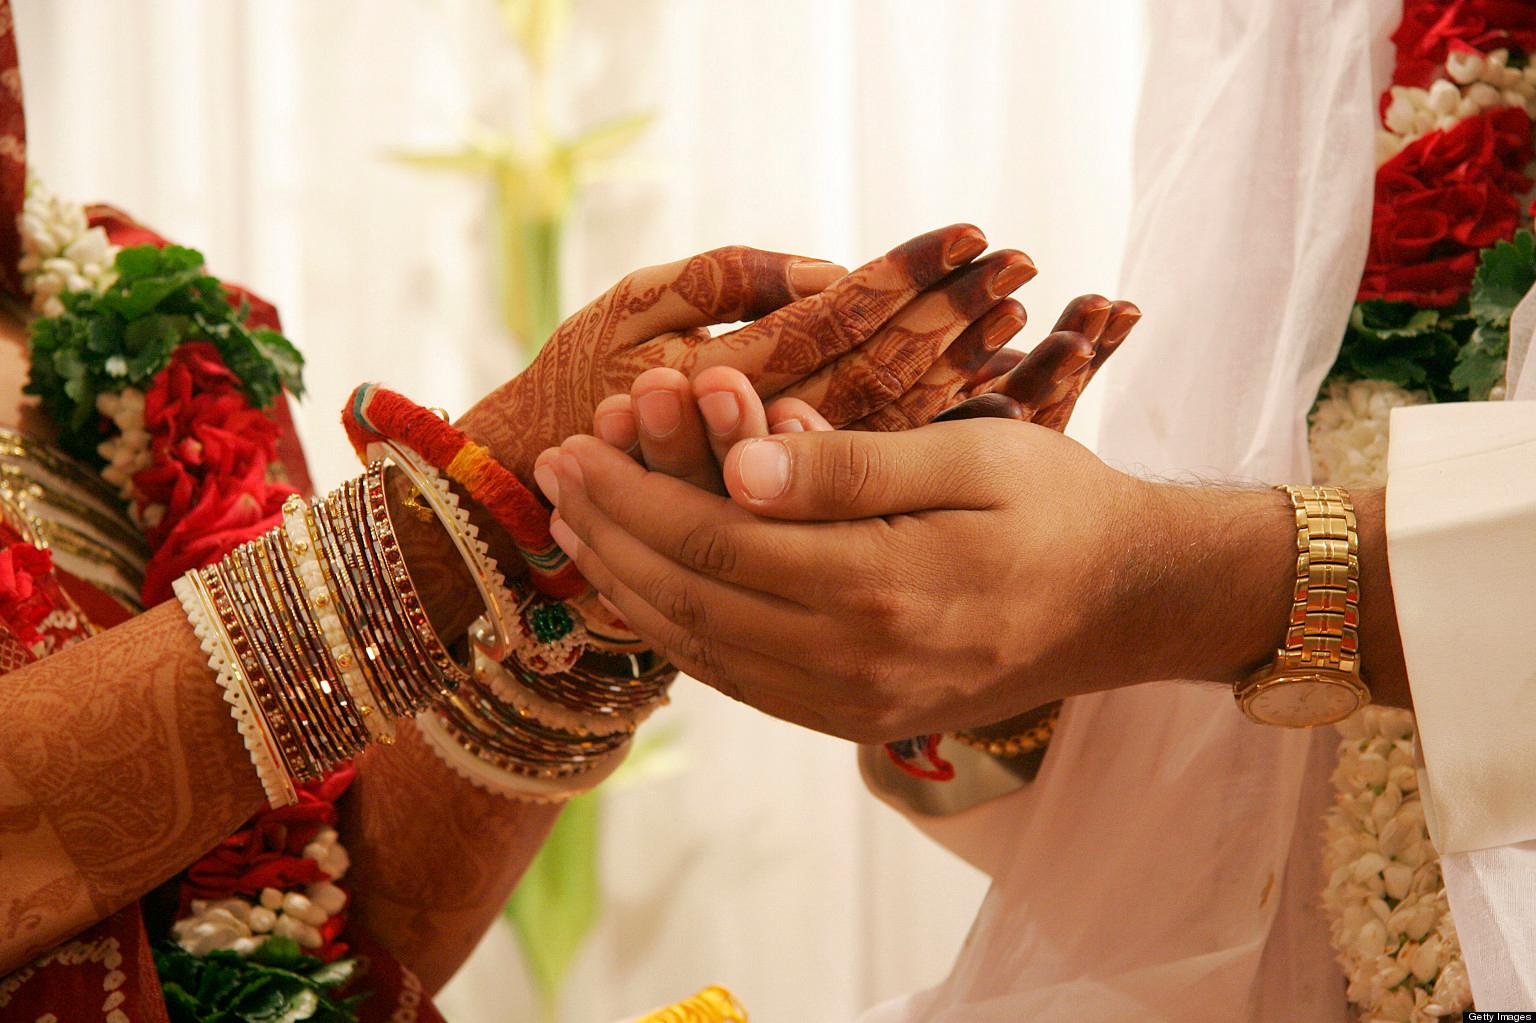 Bihar,Marriage,child marriage,